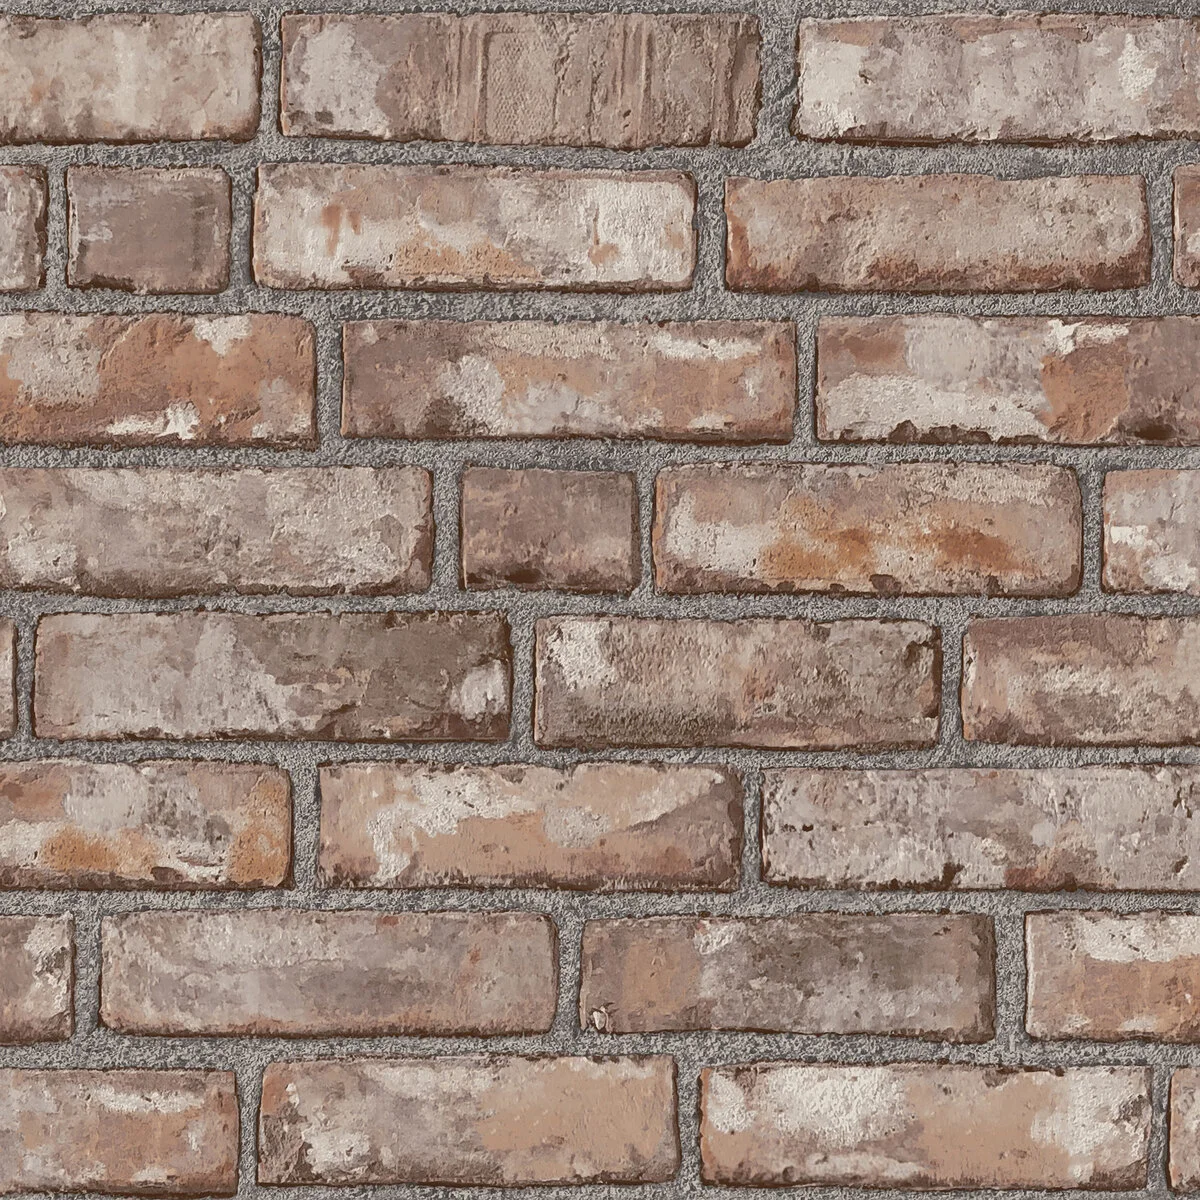 Original Brick